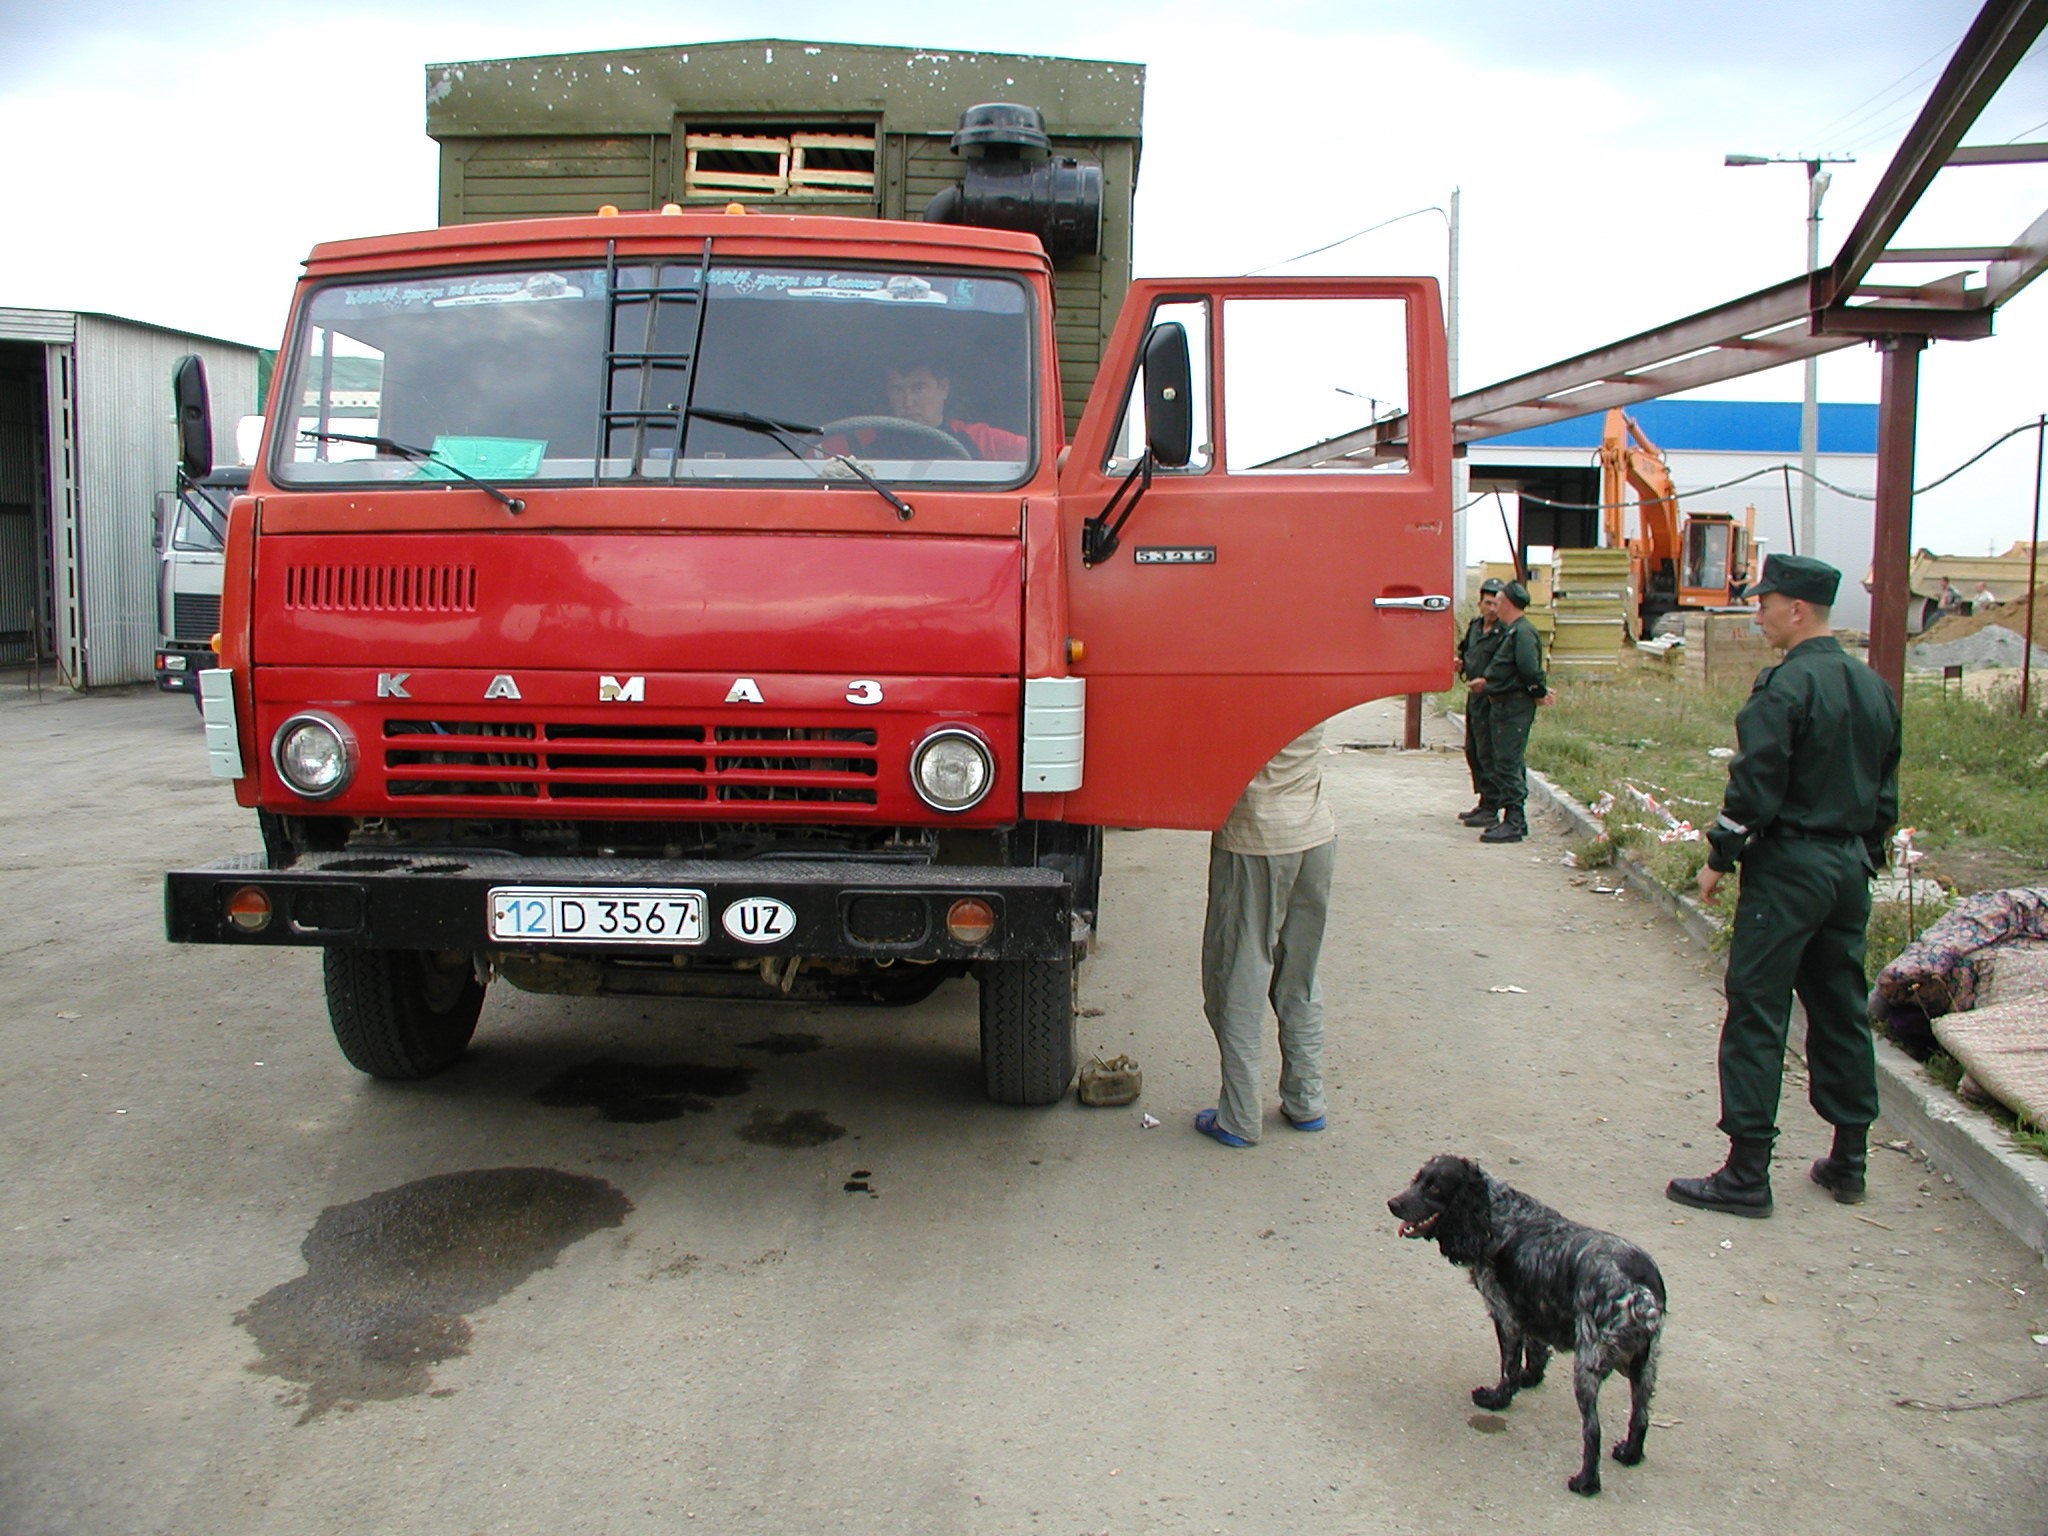 Аза с хозяином на службе - досматривают груз и проводят задержание. Фото из начала 2000-х 